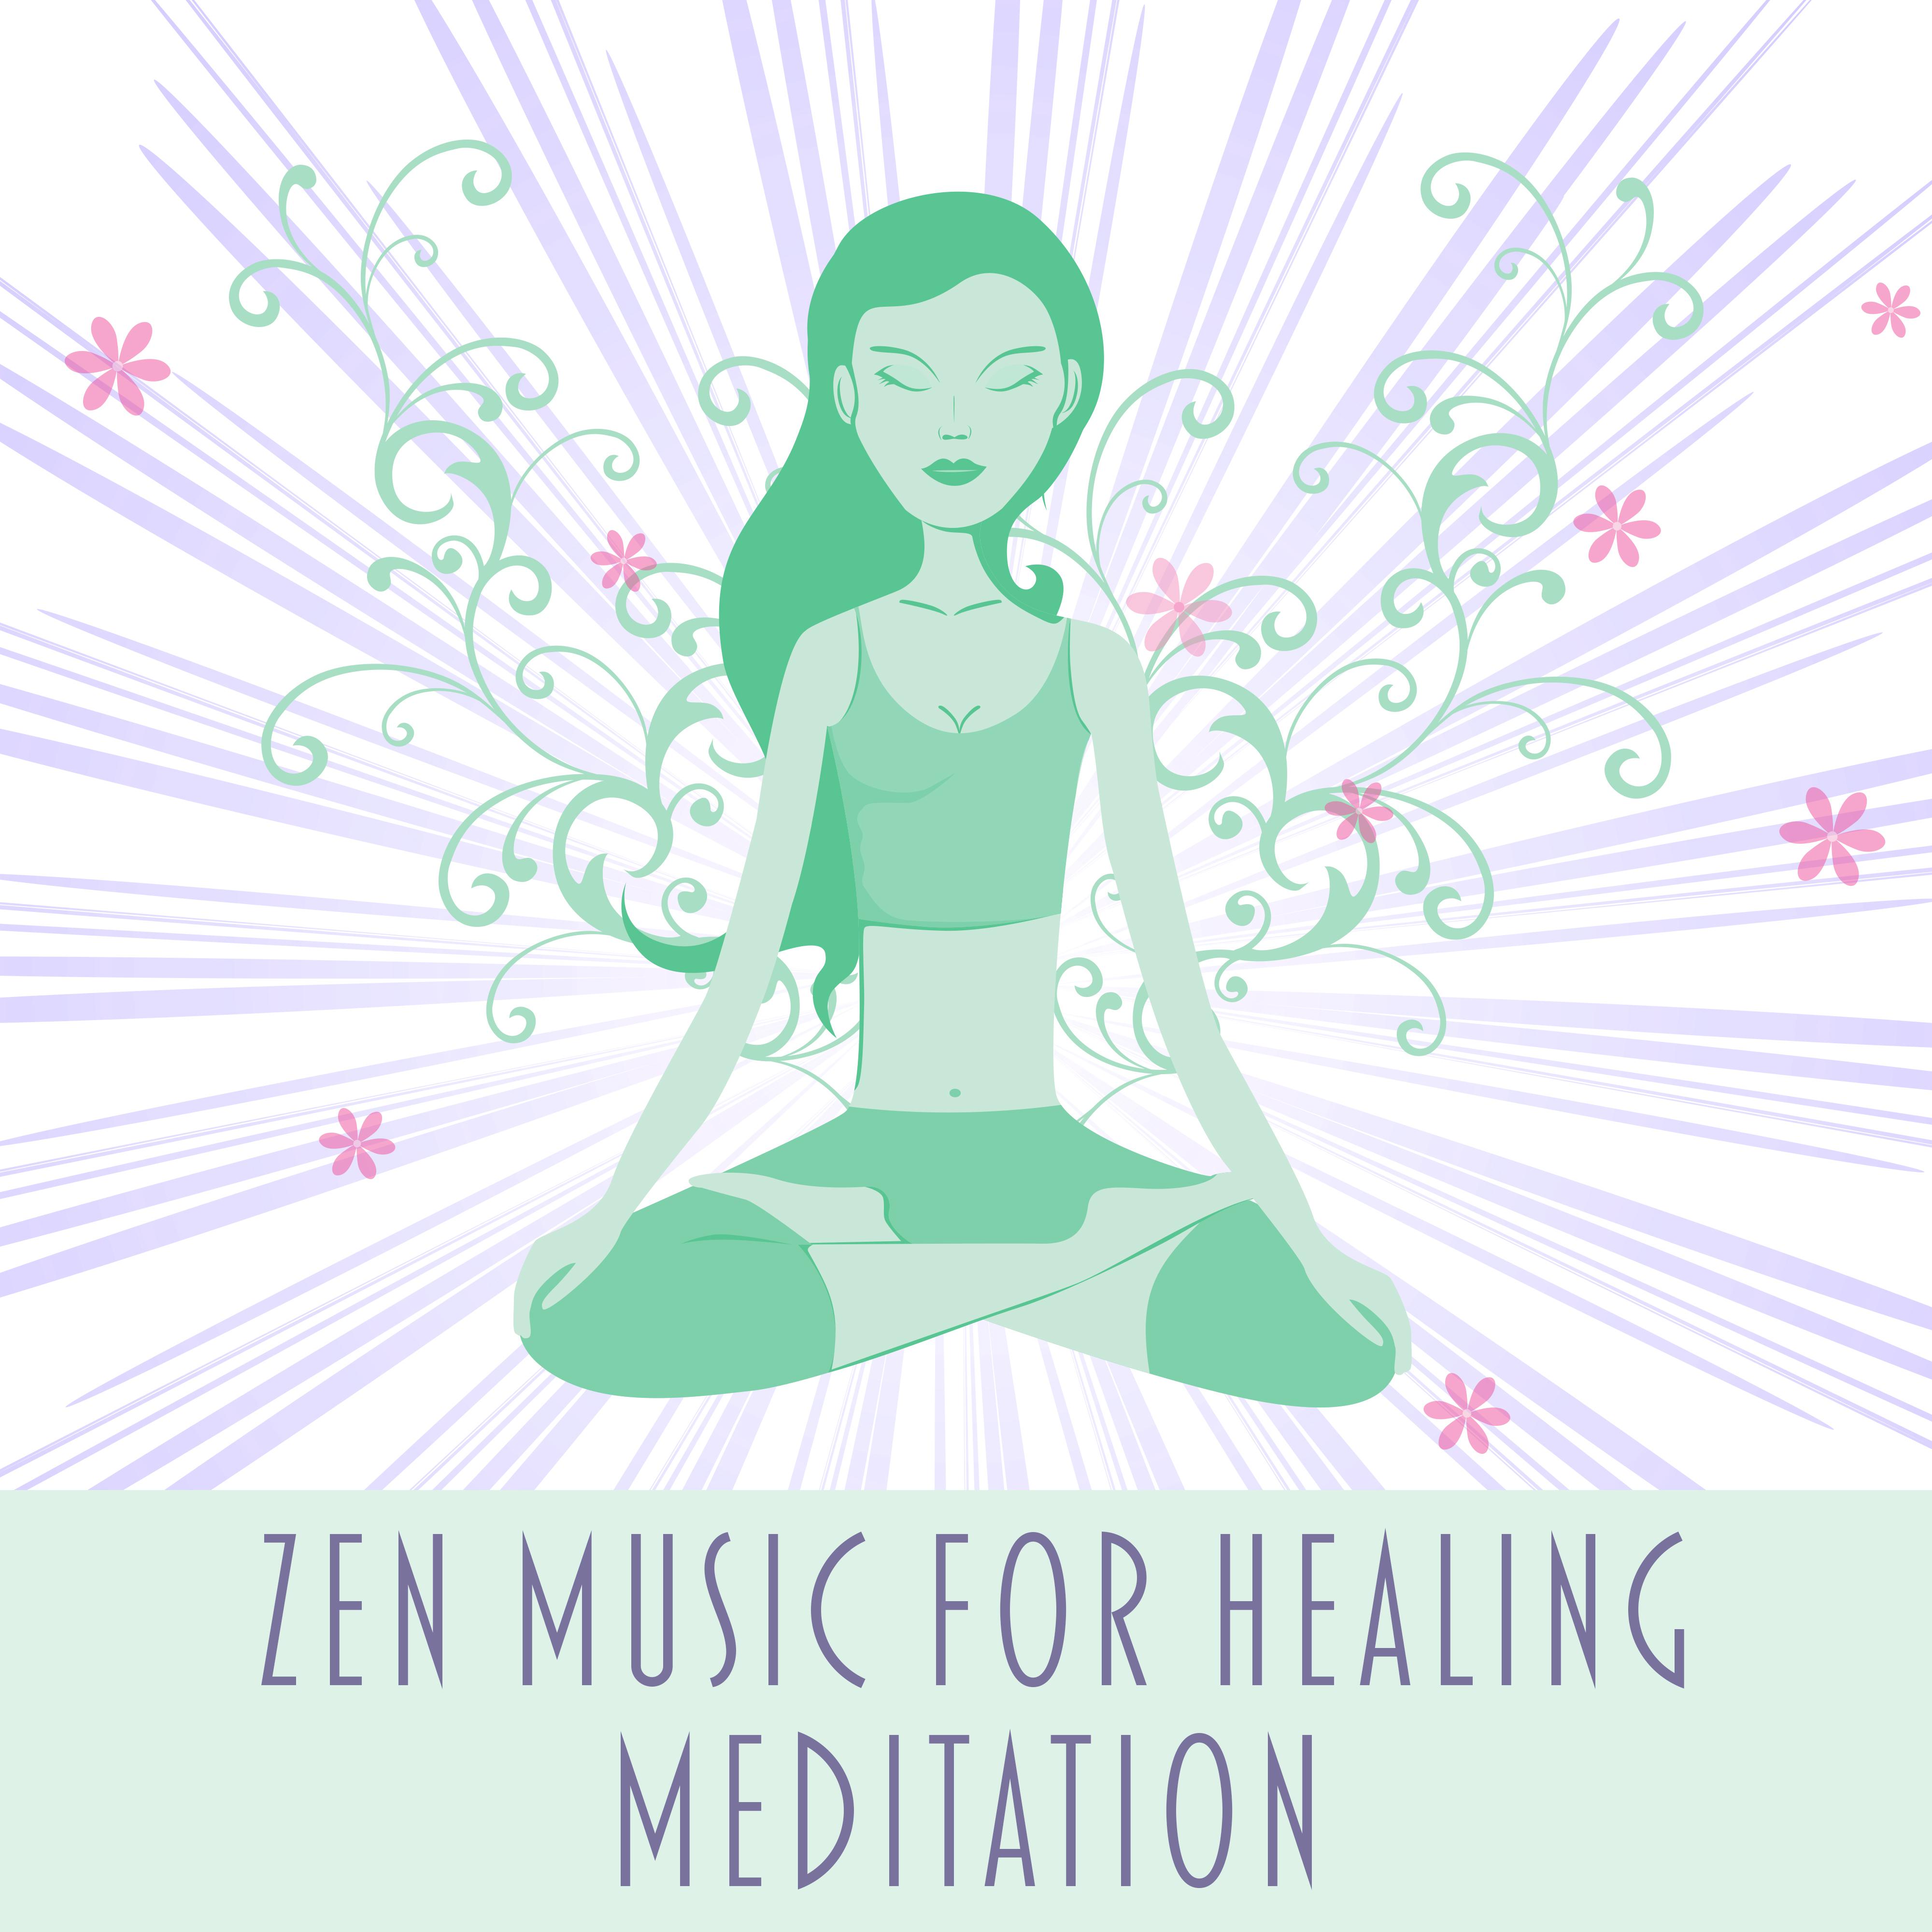 Zen Music for Healing Meditation – Reiki Music, Deep Focus, Exercise Yoga, Peaceful Mind, Calmness, Relaxation Sounds